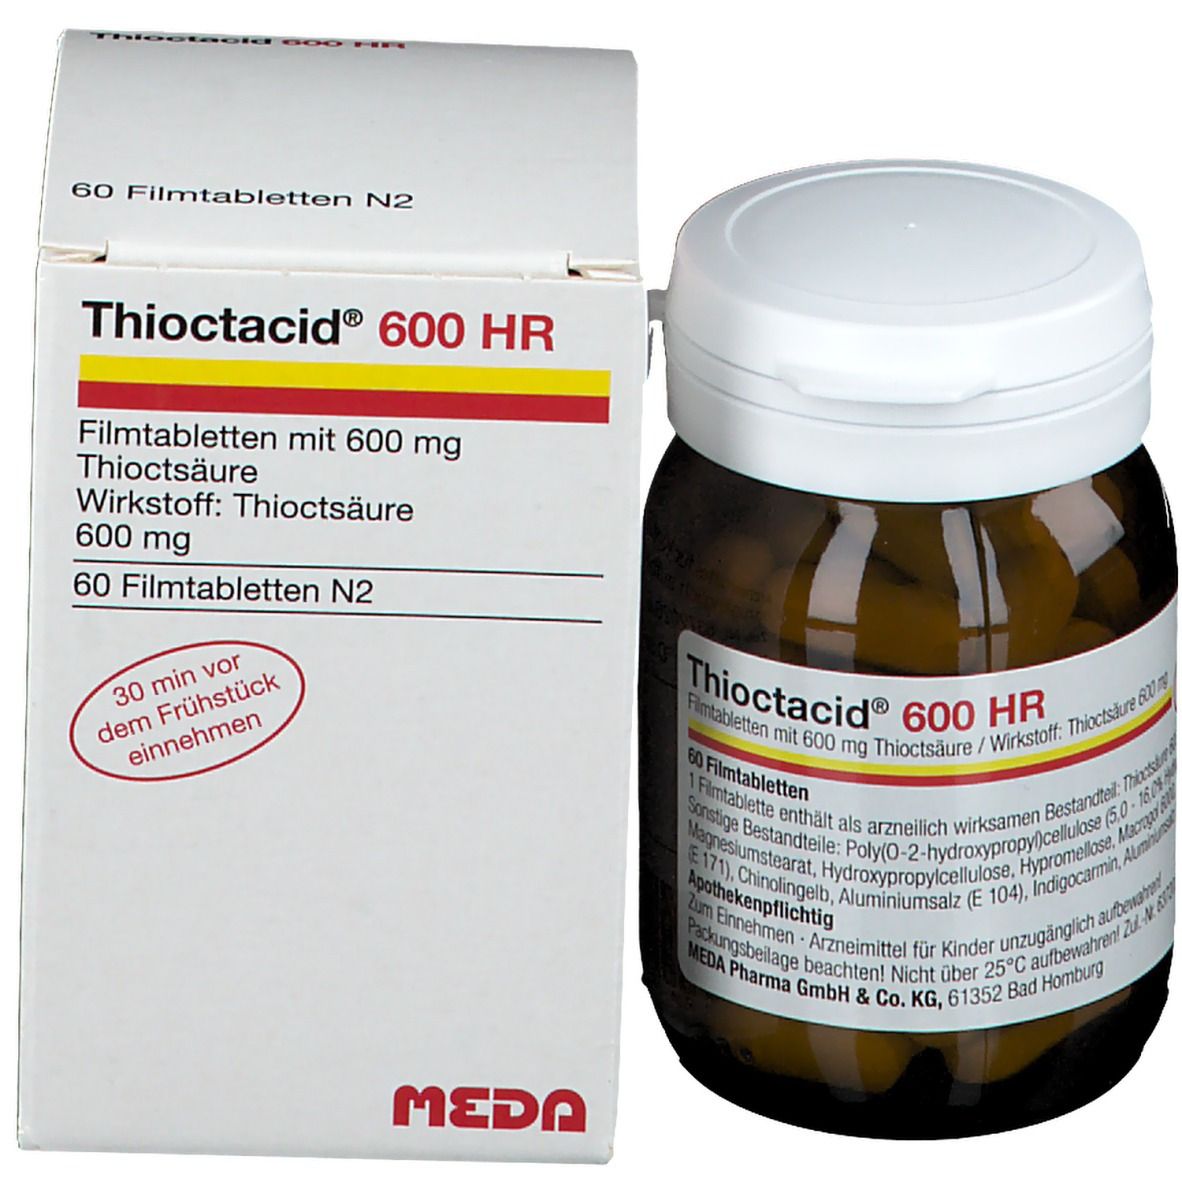 Thioctacid® 600 HR